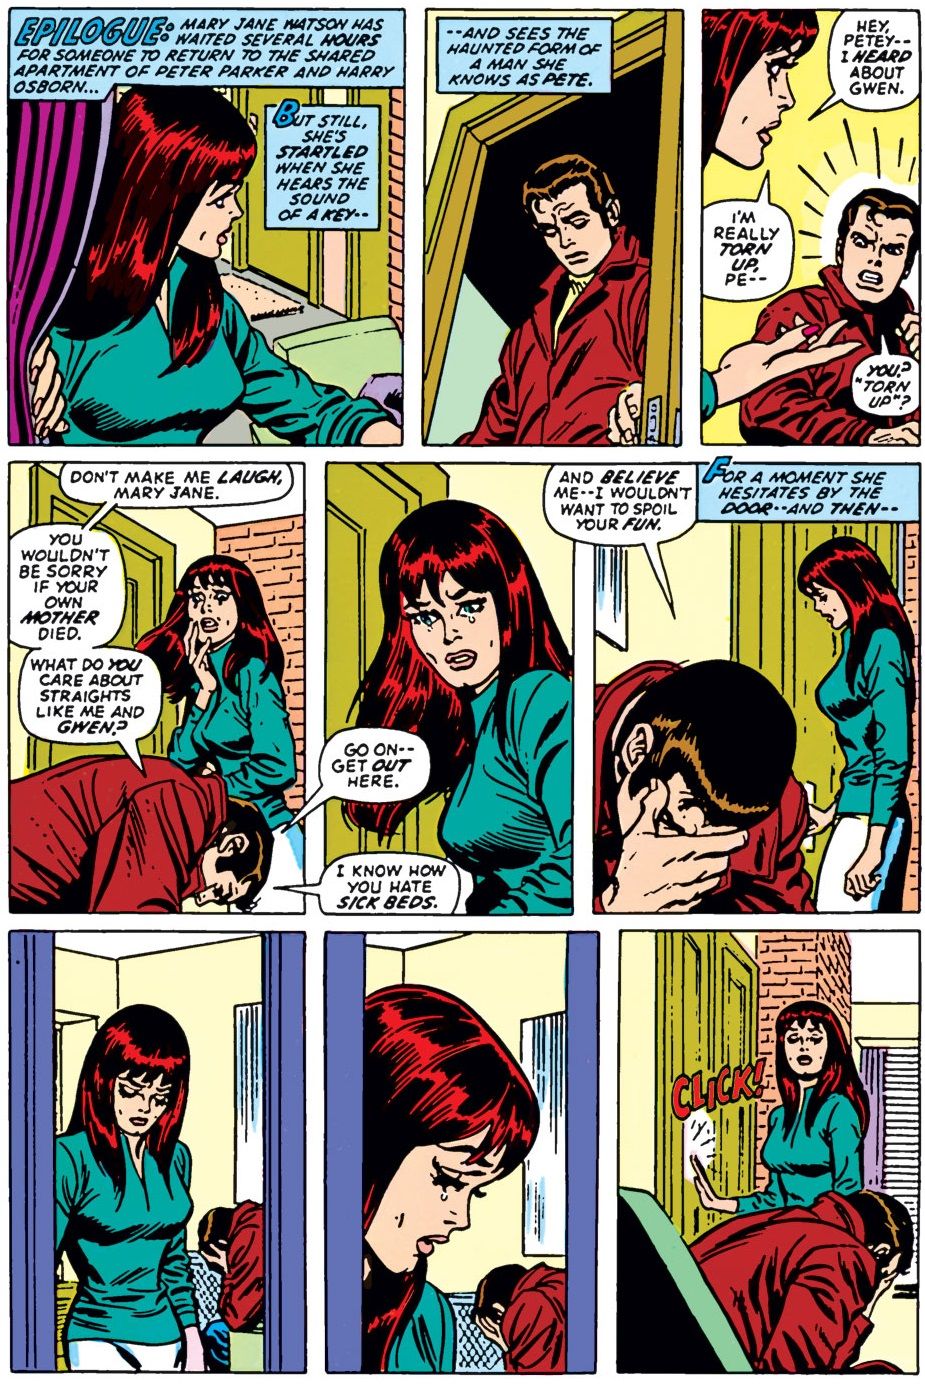 Mary Jane suporta os ataques de Peter para ajudá-lo a lamentar a morte de Gwen Stacy